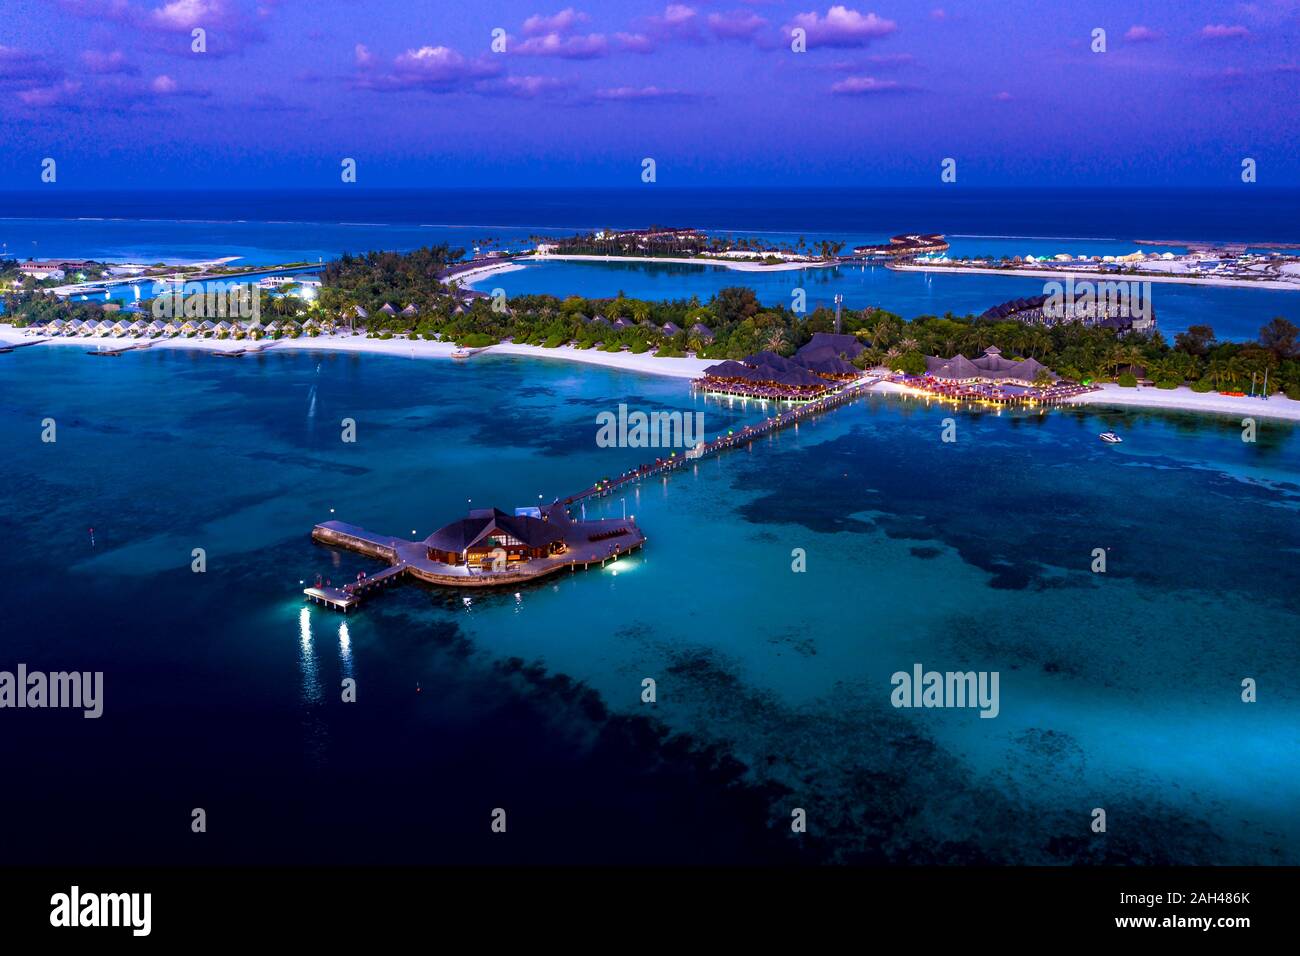 Maldivas, Olhuveli, vista aérea del complejo turístico costero de South Male Atoll al atardecer Foto de stock